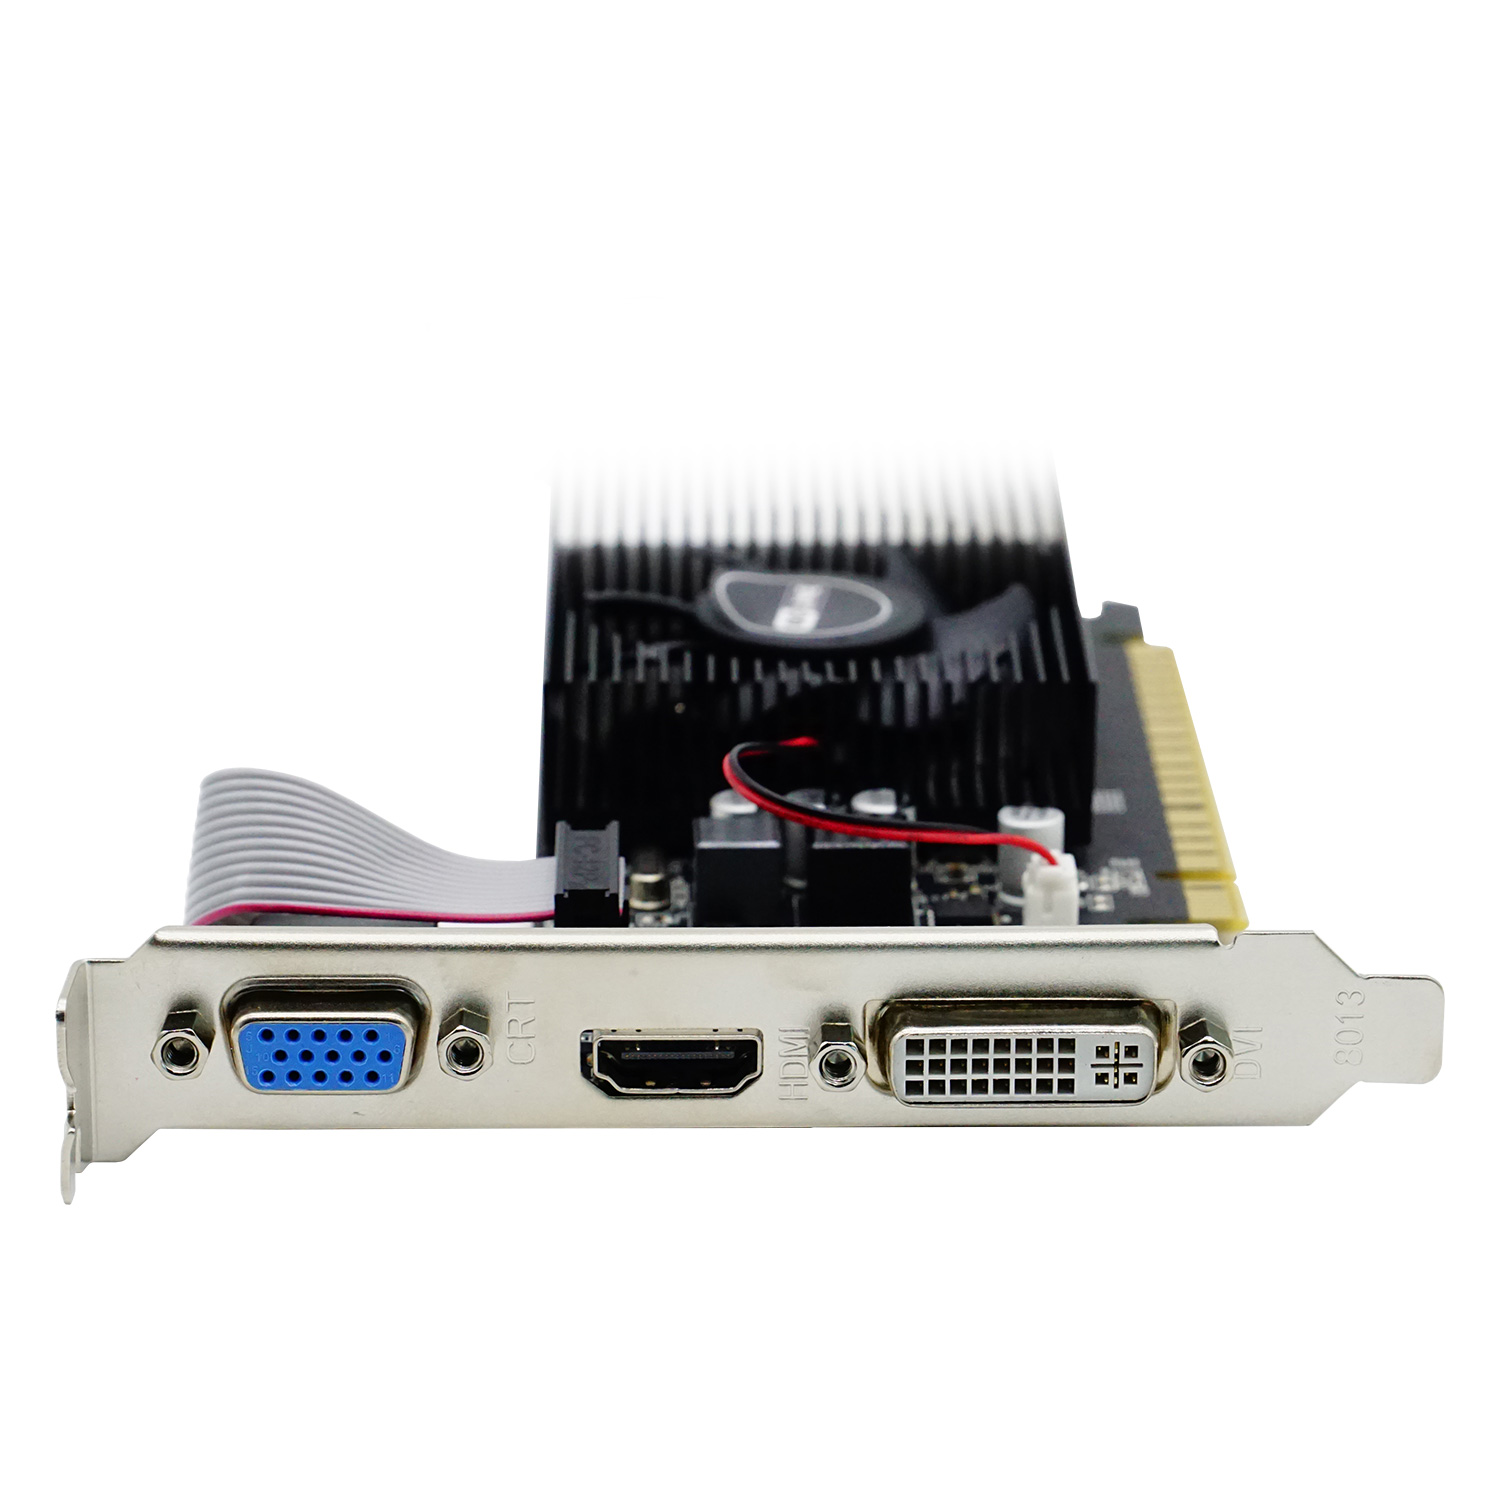 Ninja NVIDIA GT730 4GB DDR3 128-bit Low Profile PCI-E Video Card HDMI DVI  VGA